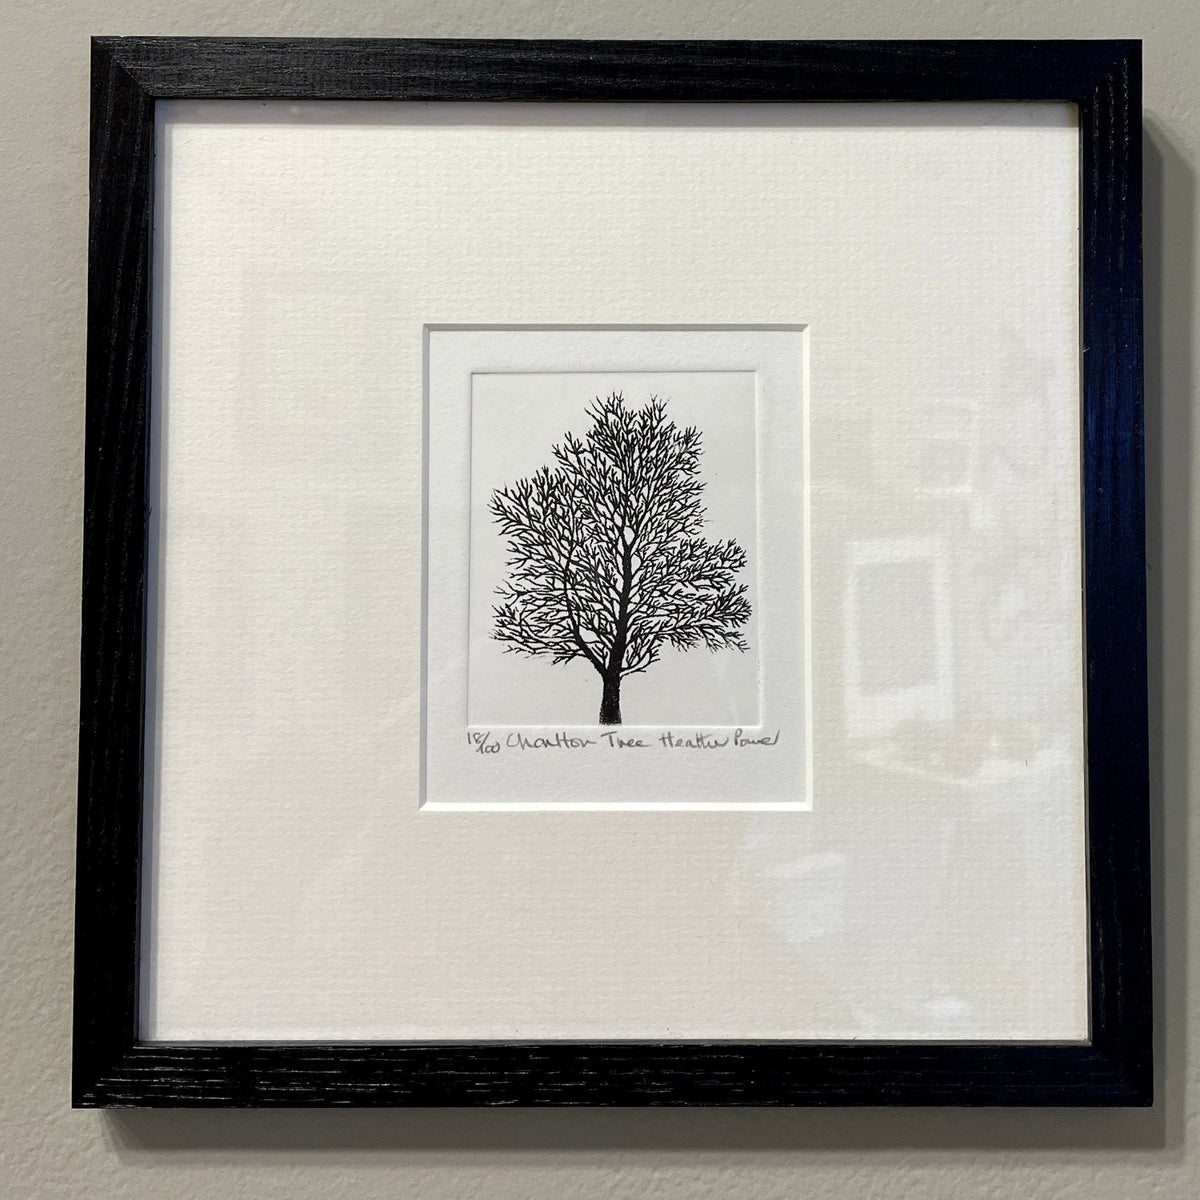 Charlton Tree by Heather Power